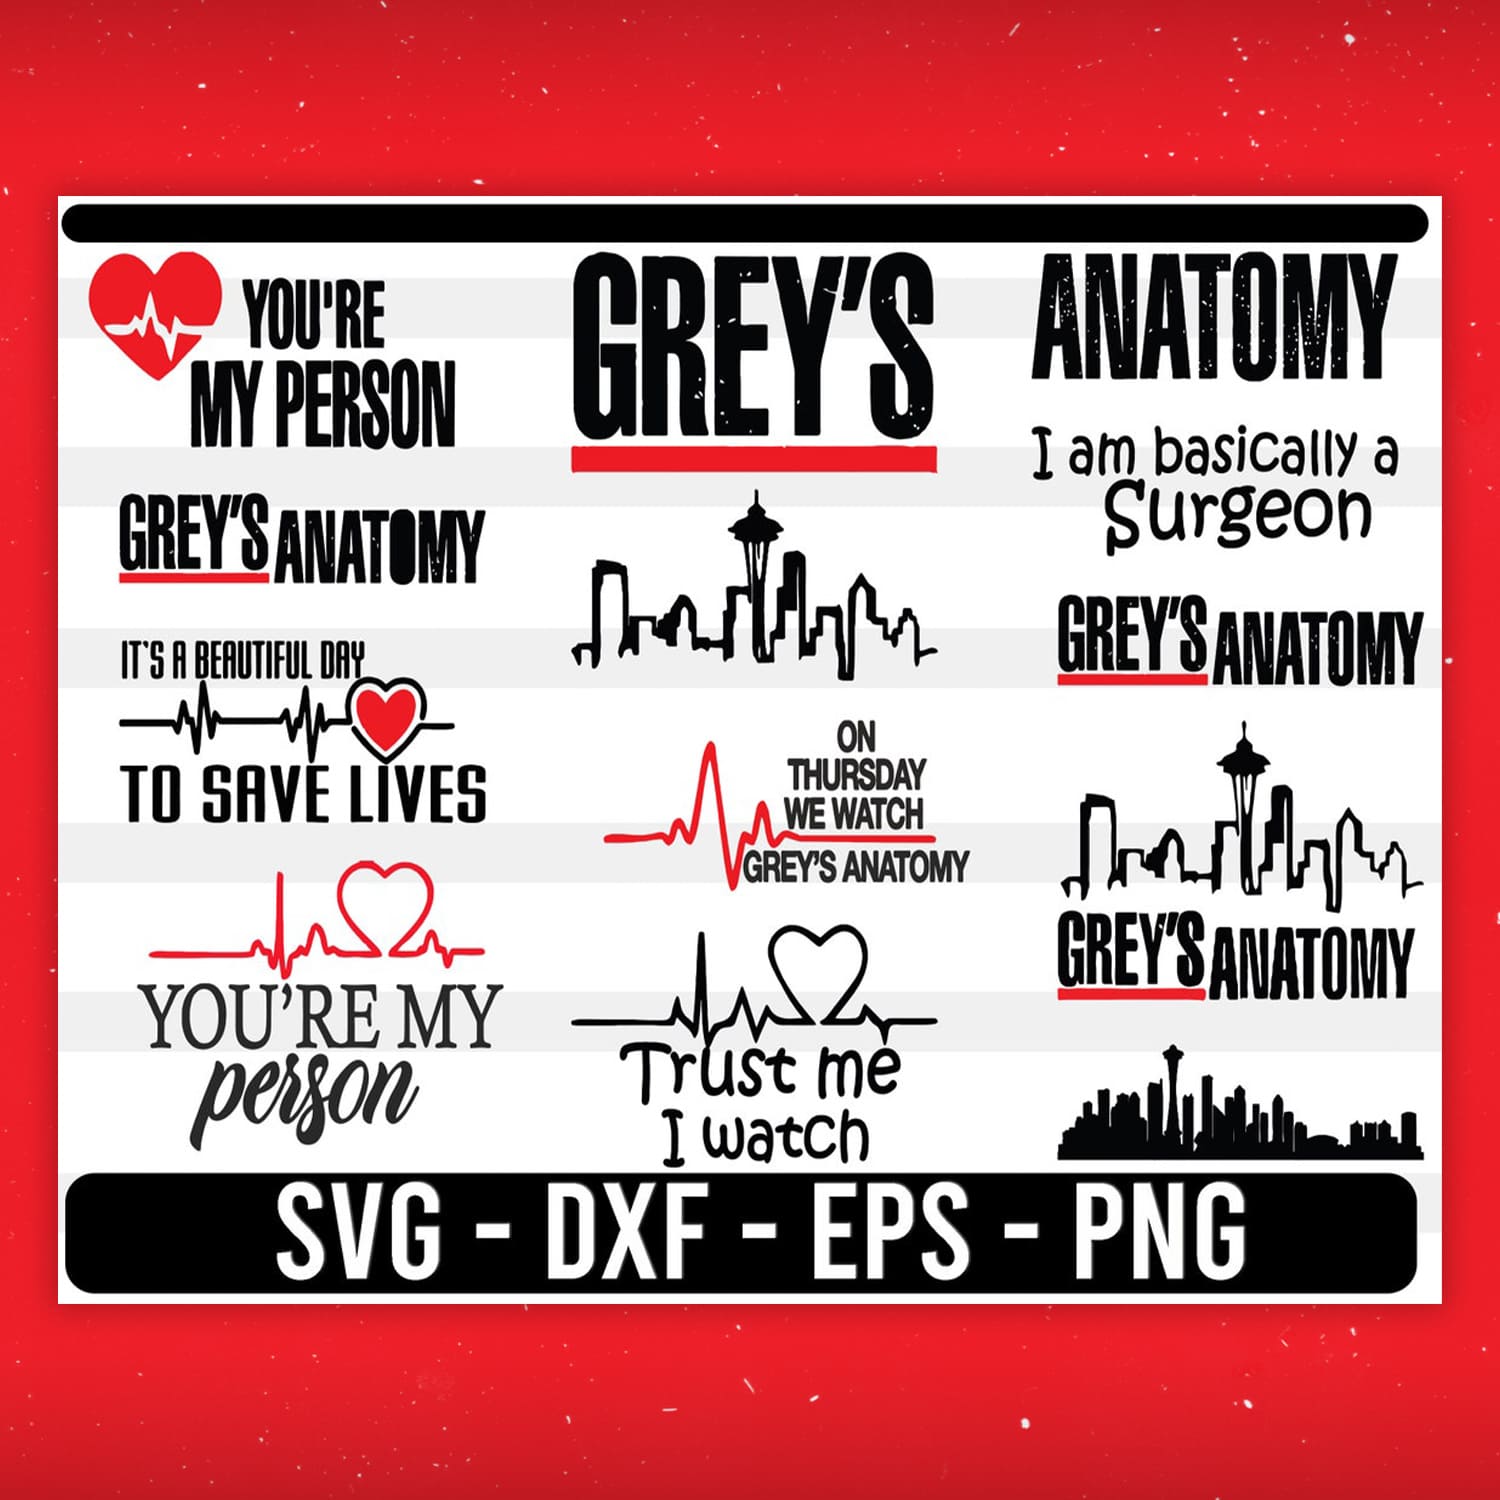 Greys Anatomy SVG cover.